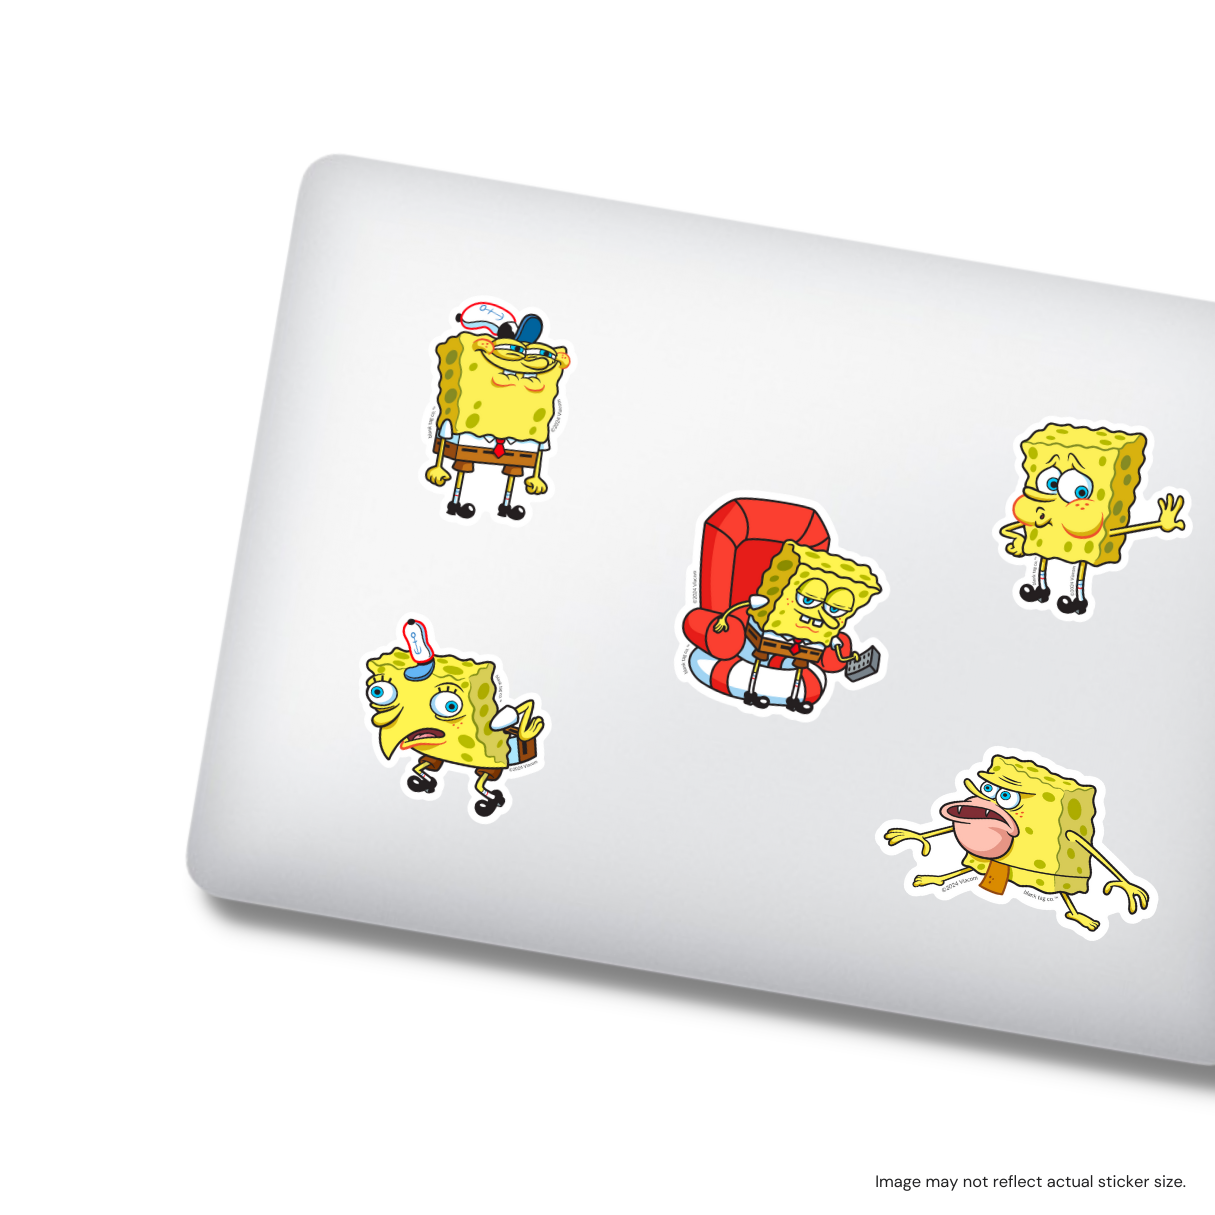 The Aight Imma Head Out SpongeBob Meme Sticker